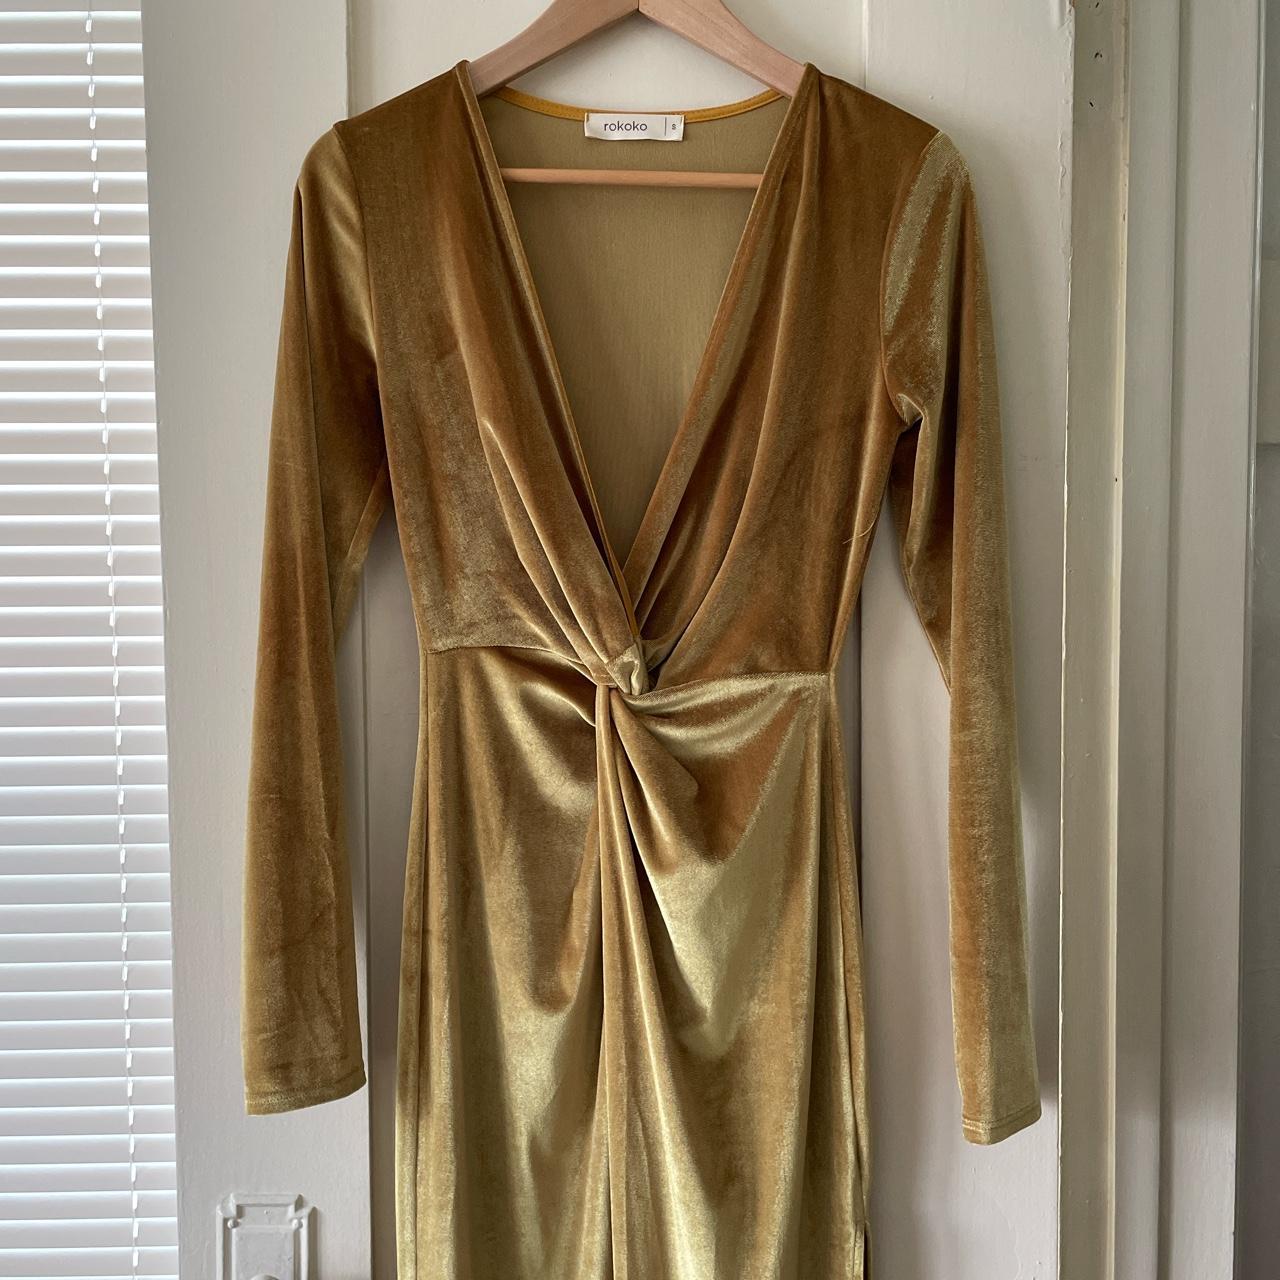 Rokoko Women's Gold Dress (3)